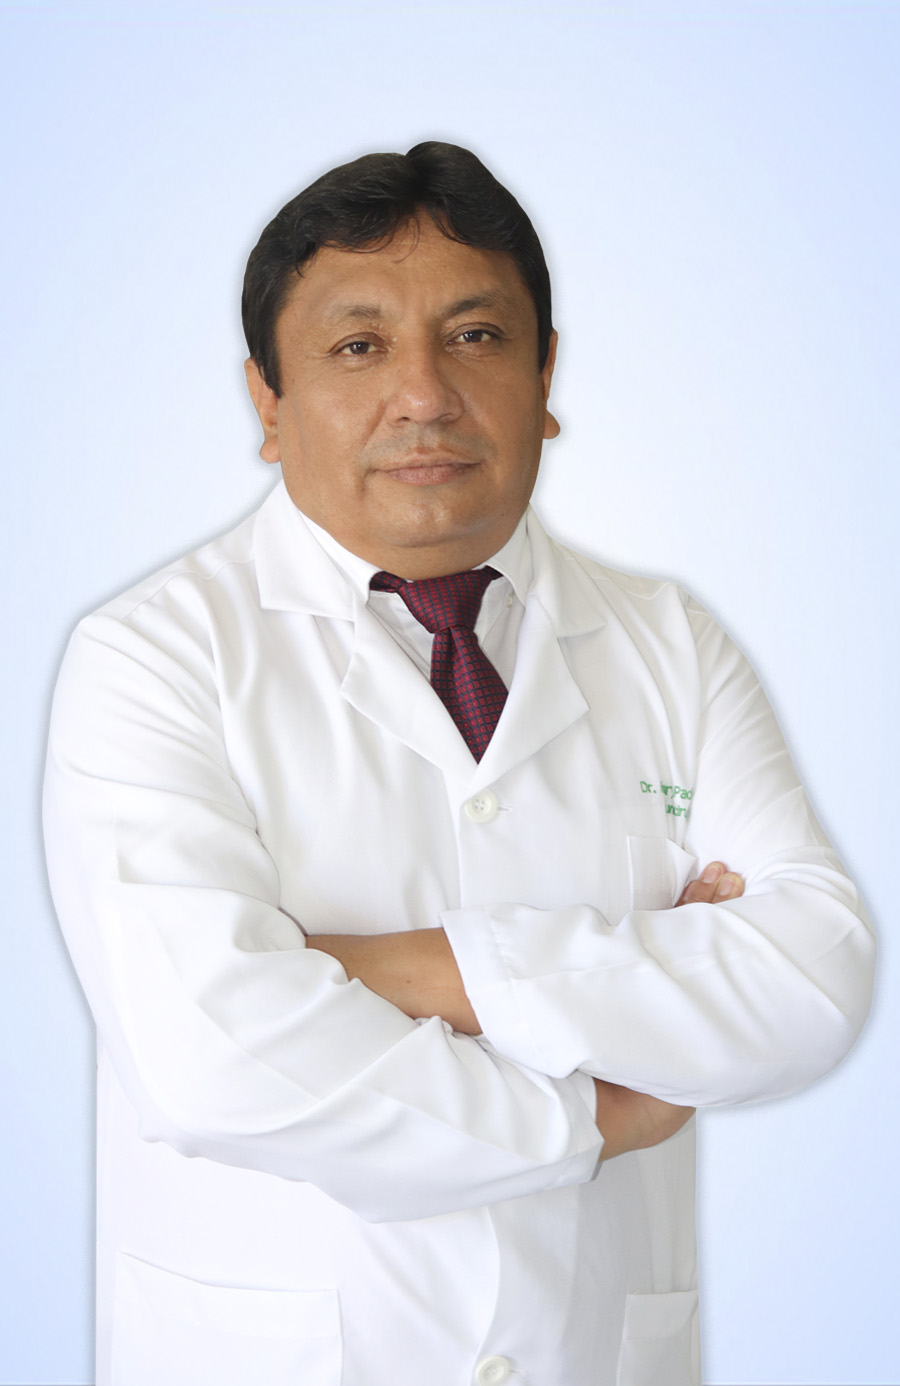 DR. PACHECO